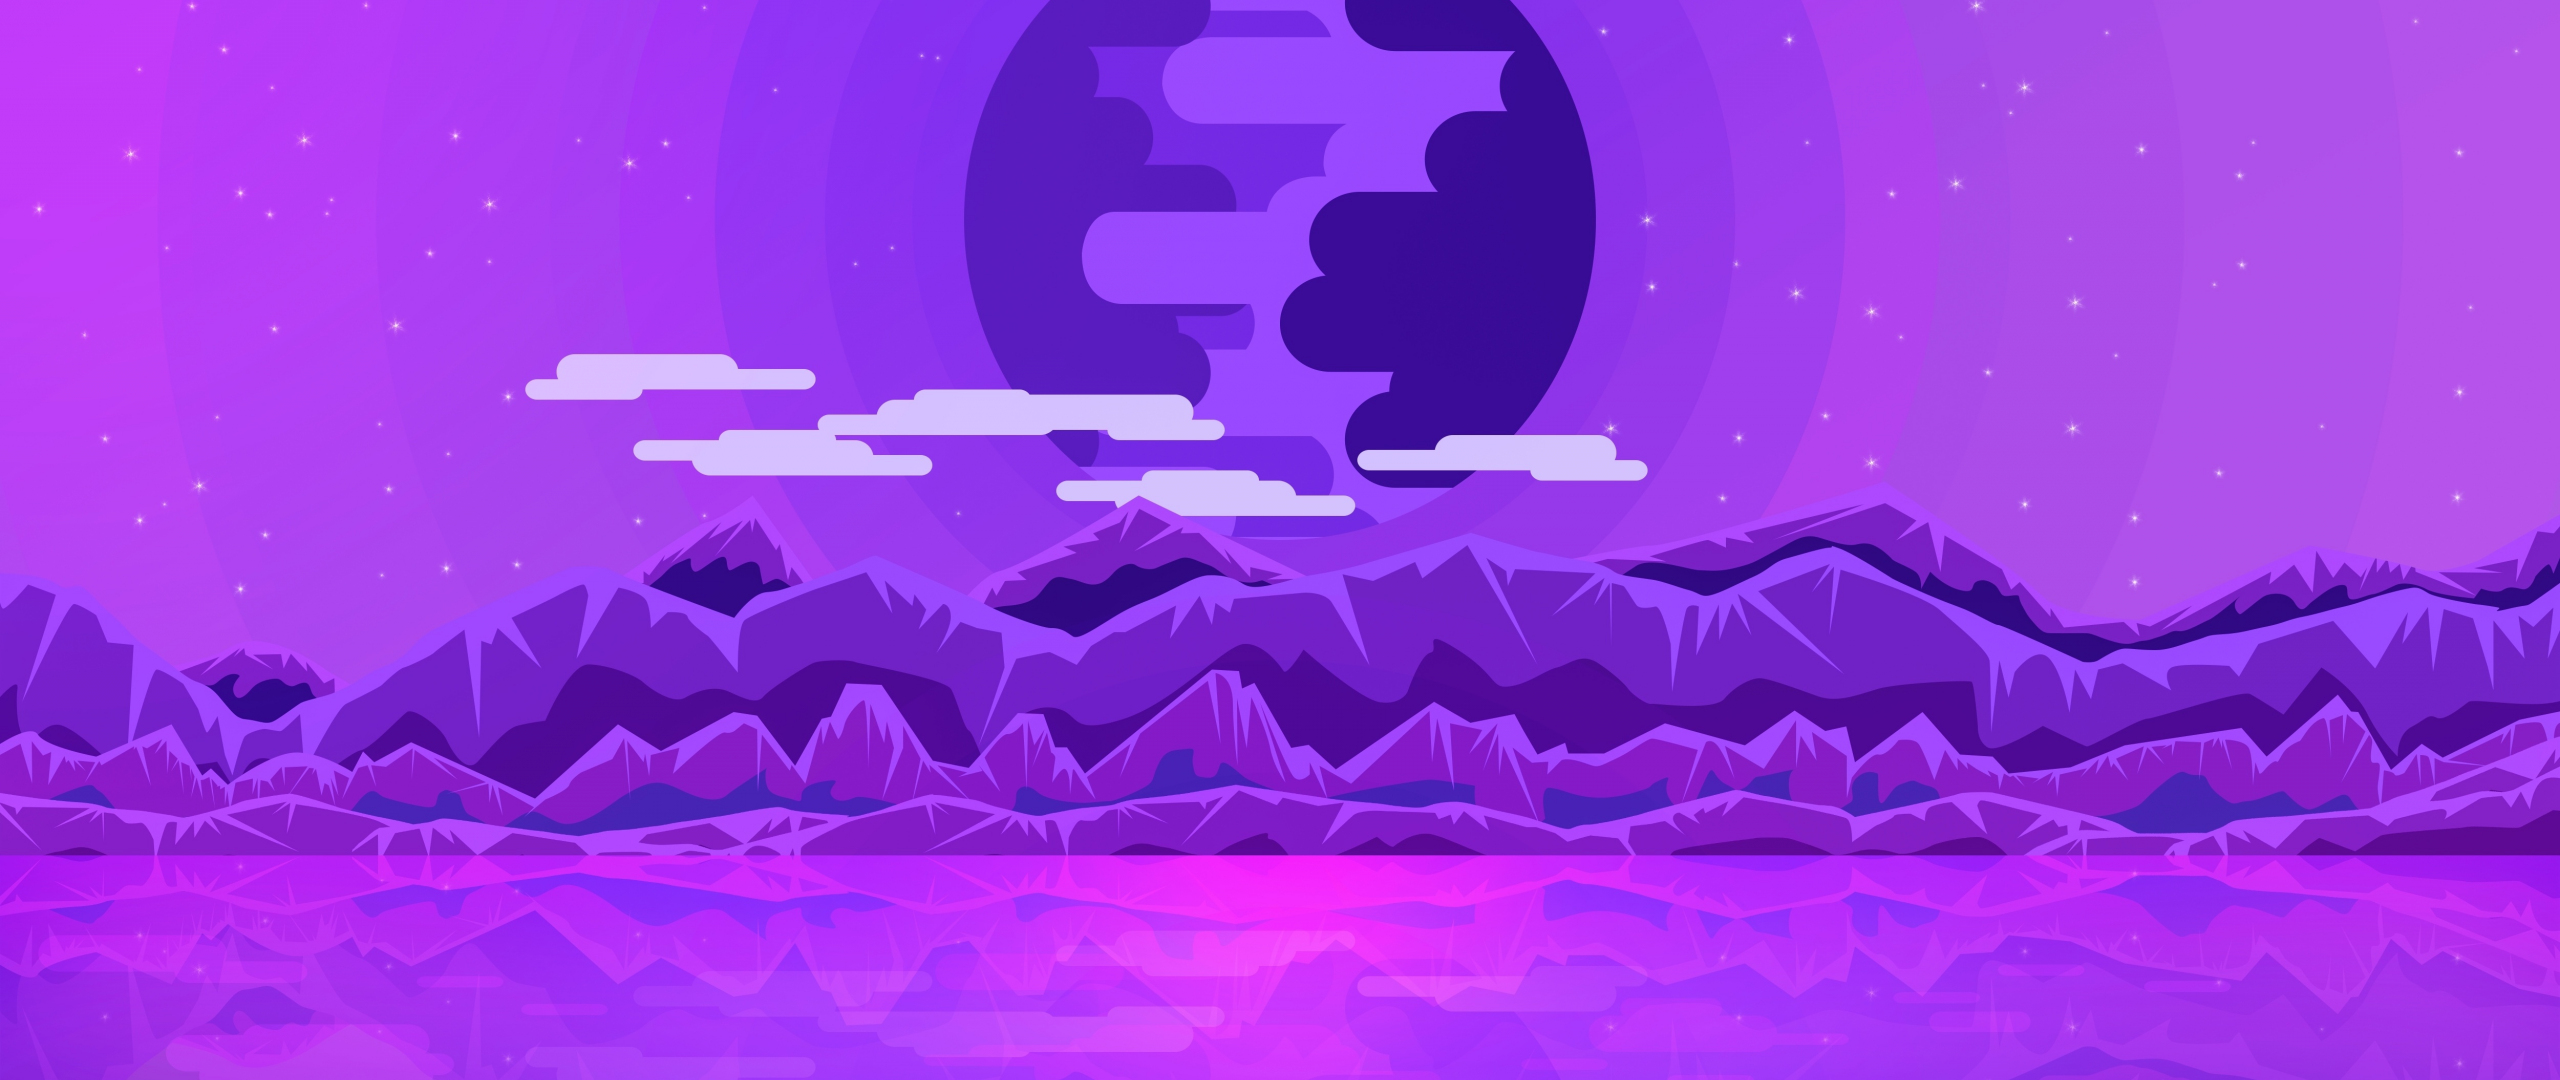 Download wallpaper 2560x1080 purple ocean, mountains, minimal, art, dual wide 2560x1080 HD background, 19346